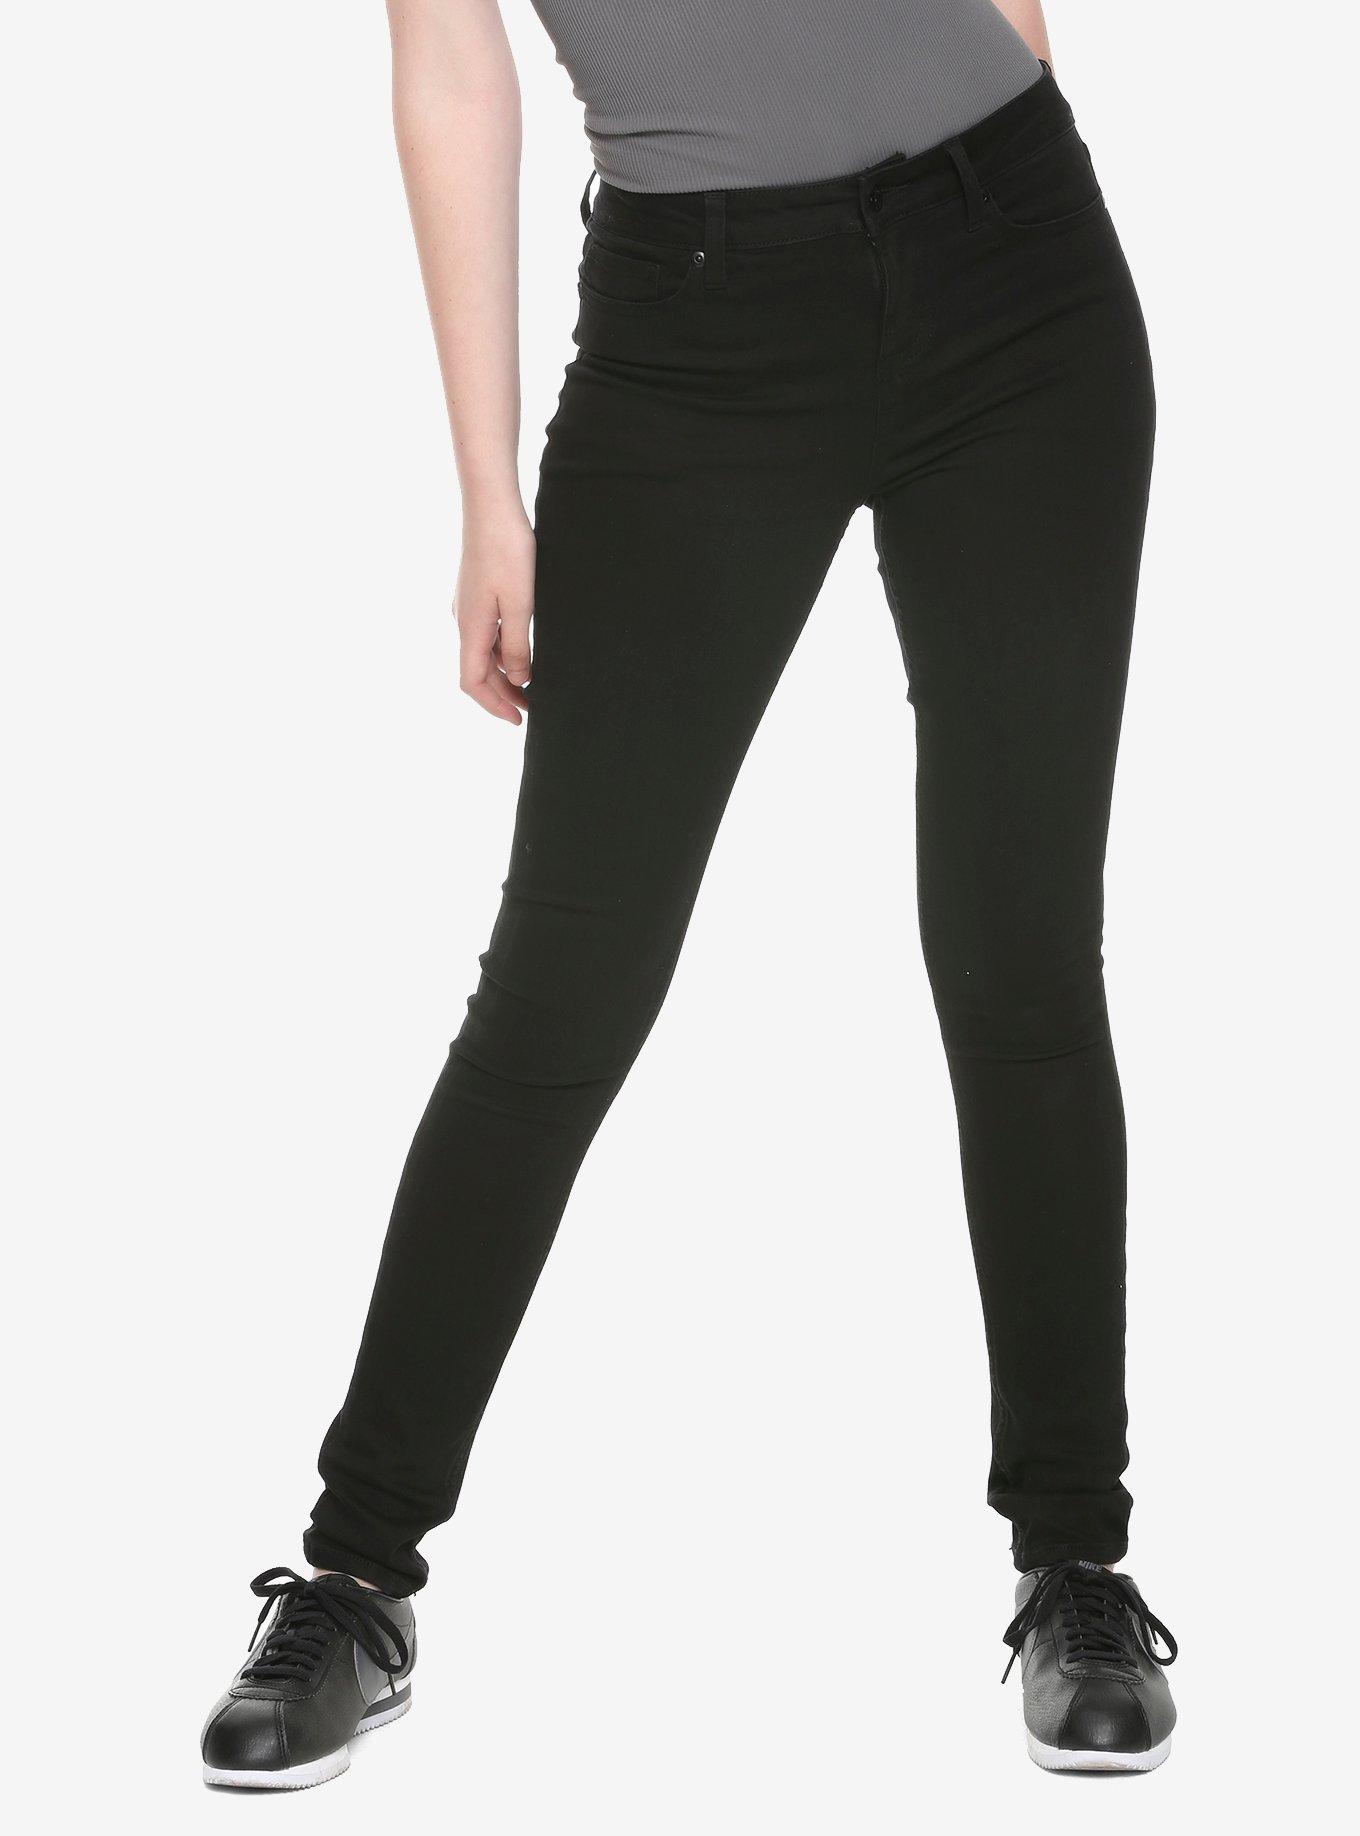 HT Denim Black Low-Rise Skinny Jeans, BLACK, hi-res